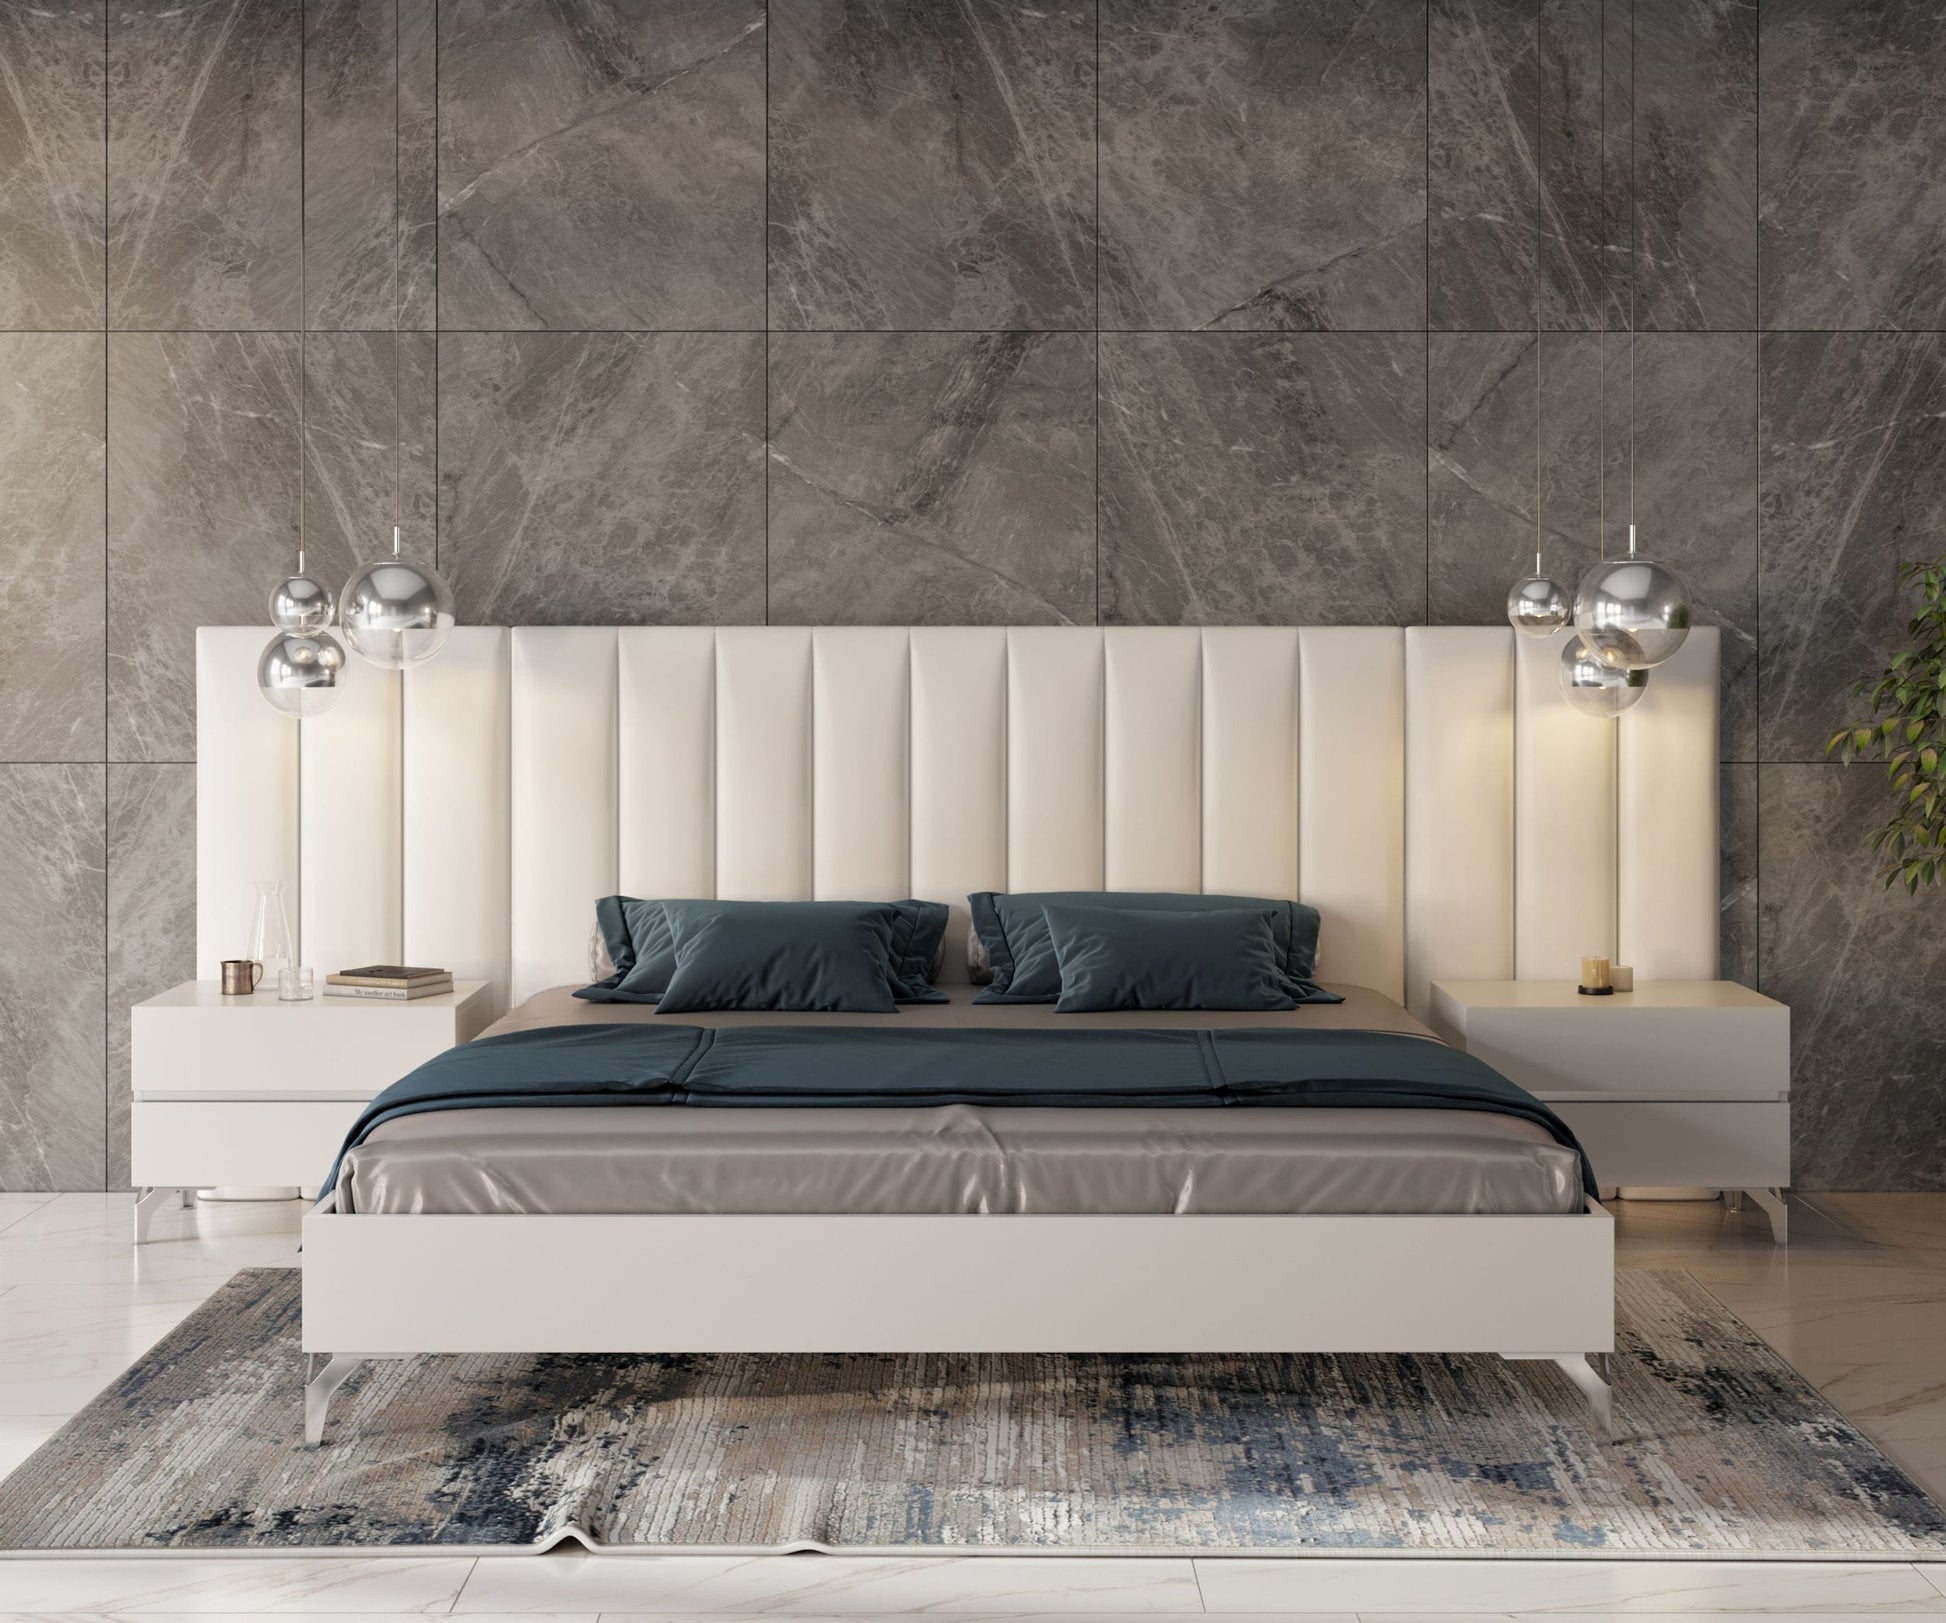 VIG Furniture Nova Domus Angela Italian White Leather Bed Nightstands Wings